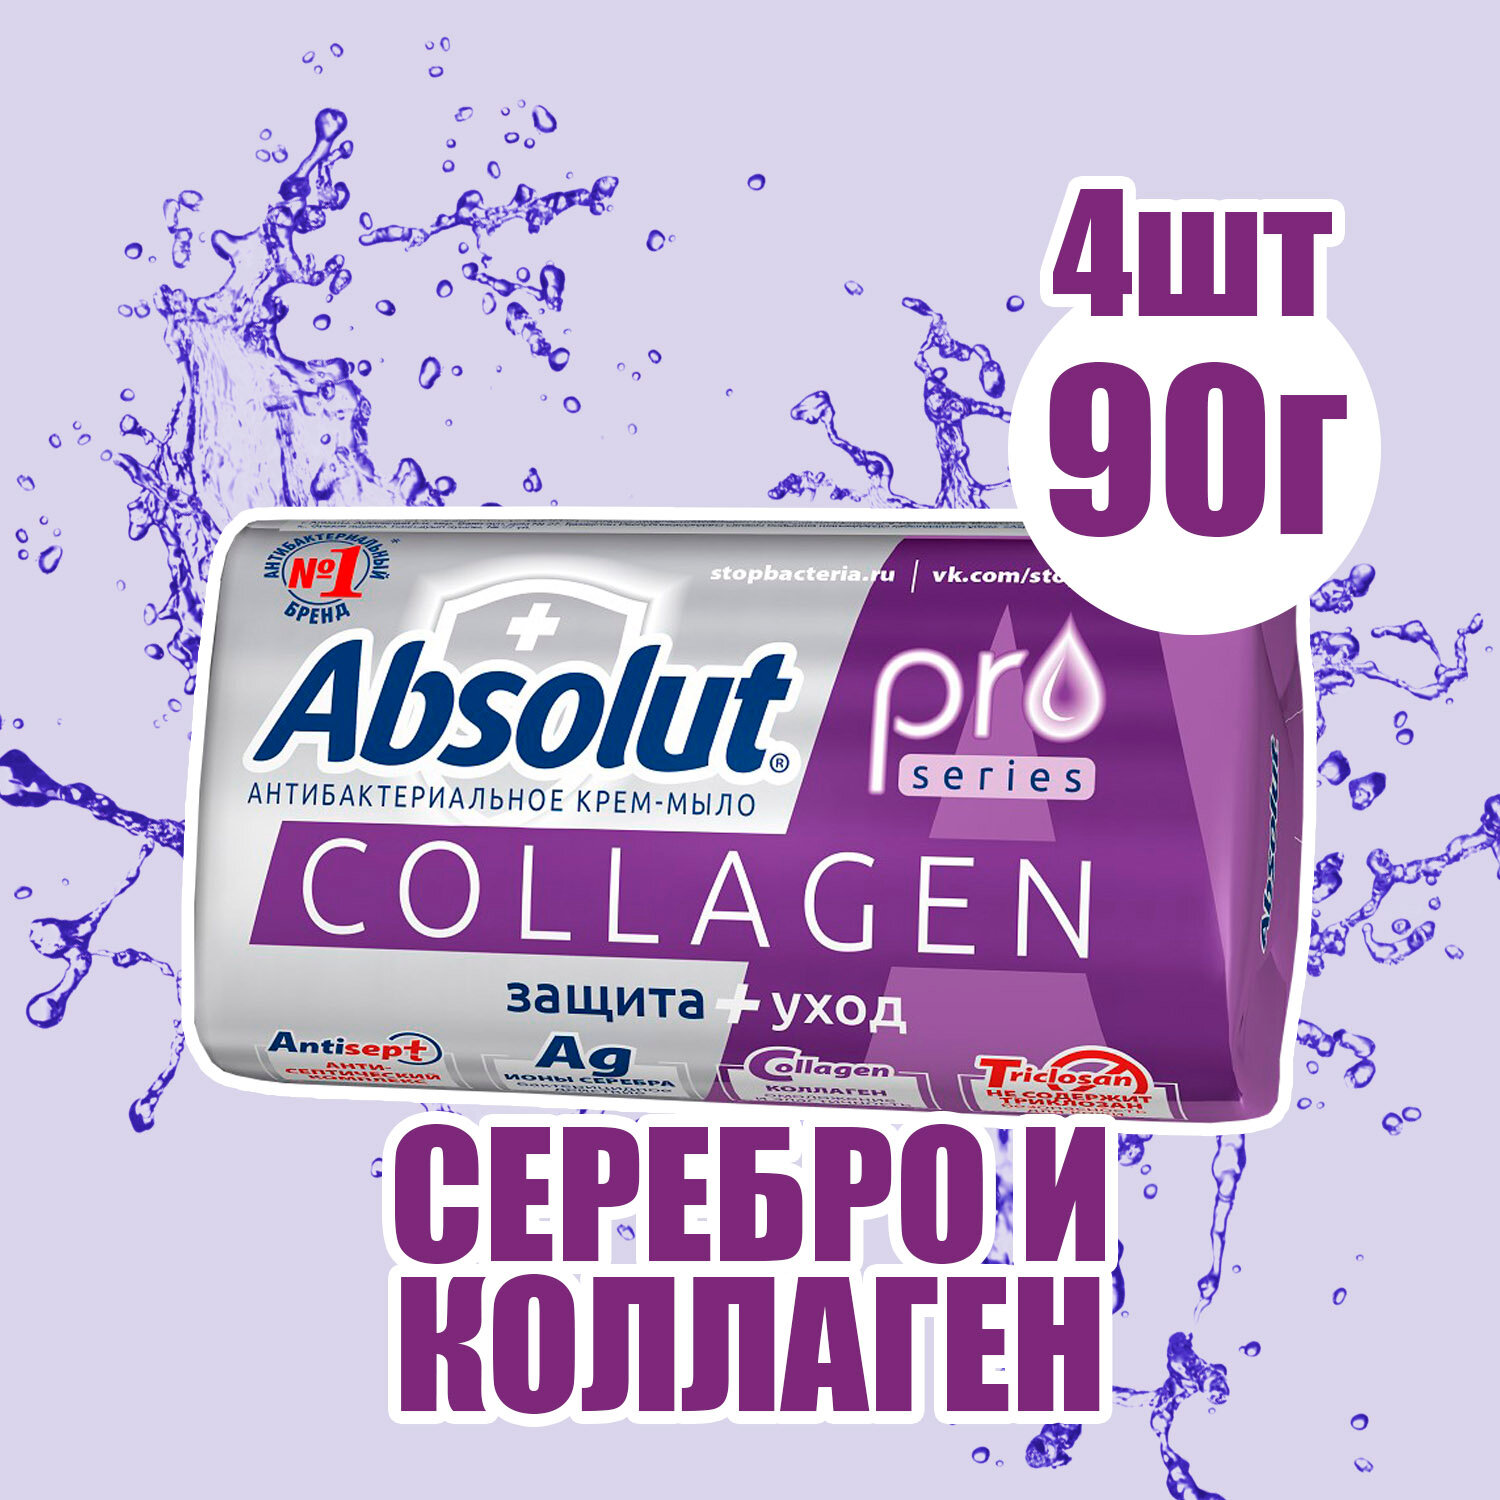 Мыло Absolut pro туалетное серебро + коллаген 90 г ( 4 шт )